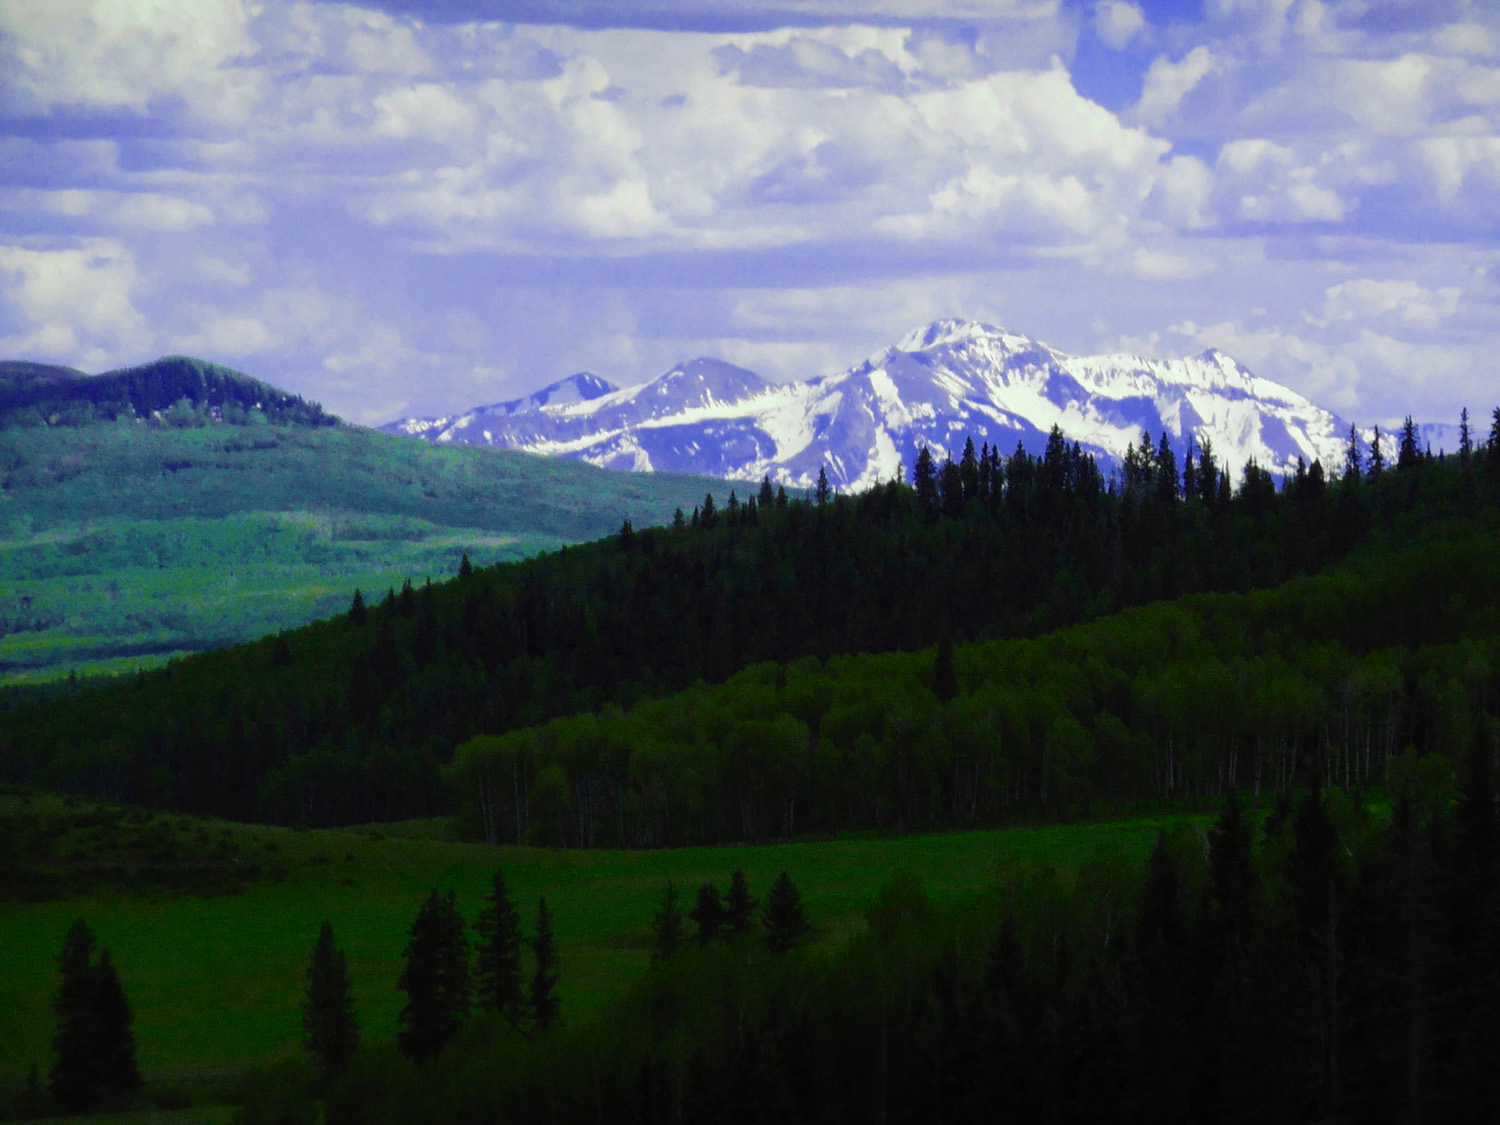 West Elk Mountains